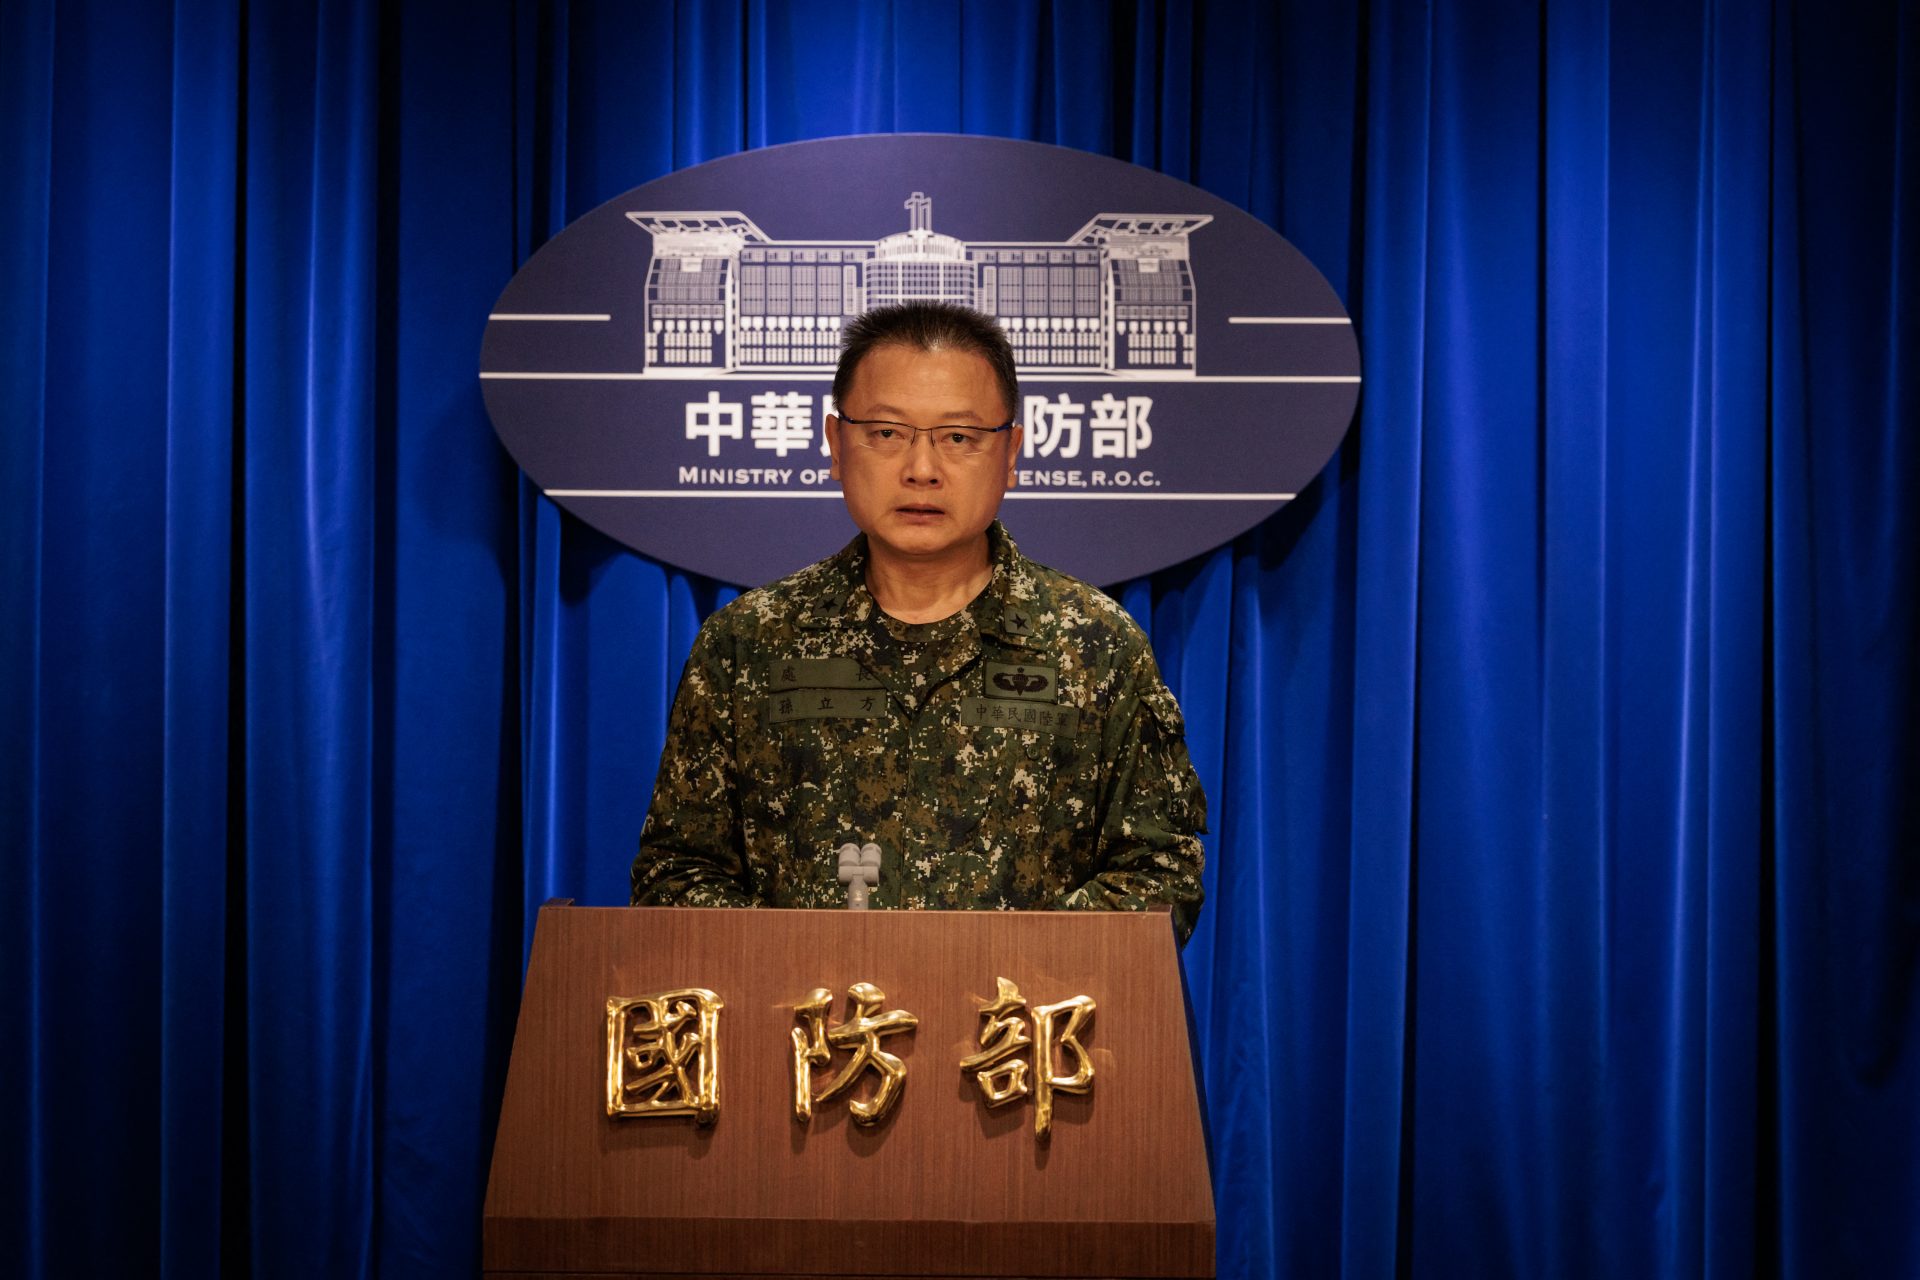 The Taiwan defense question